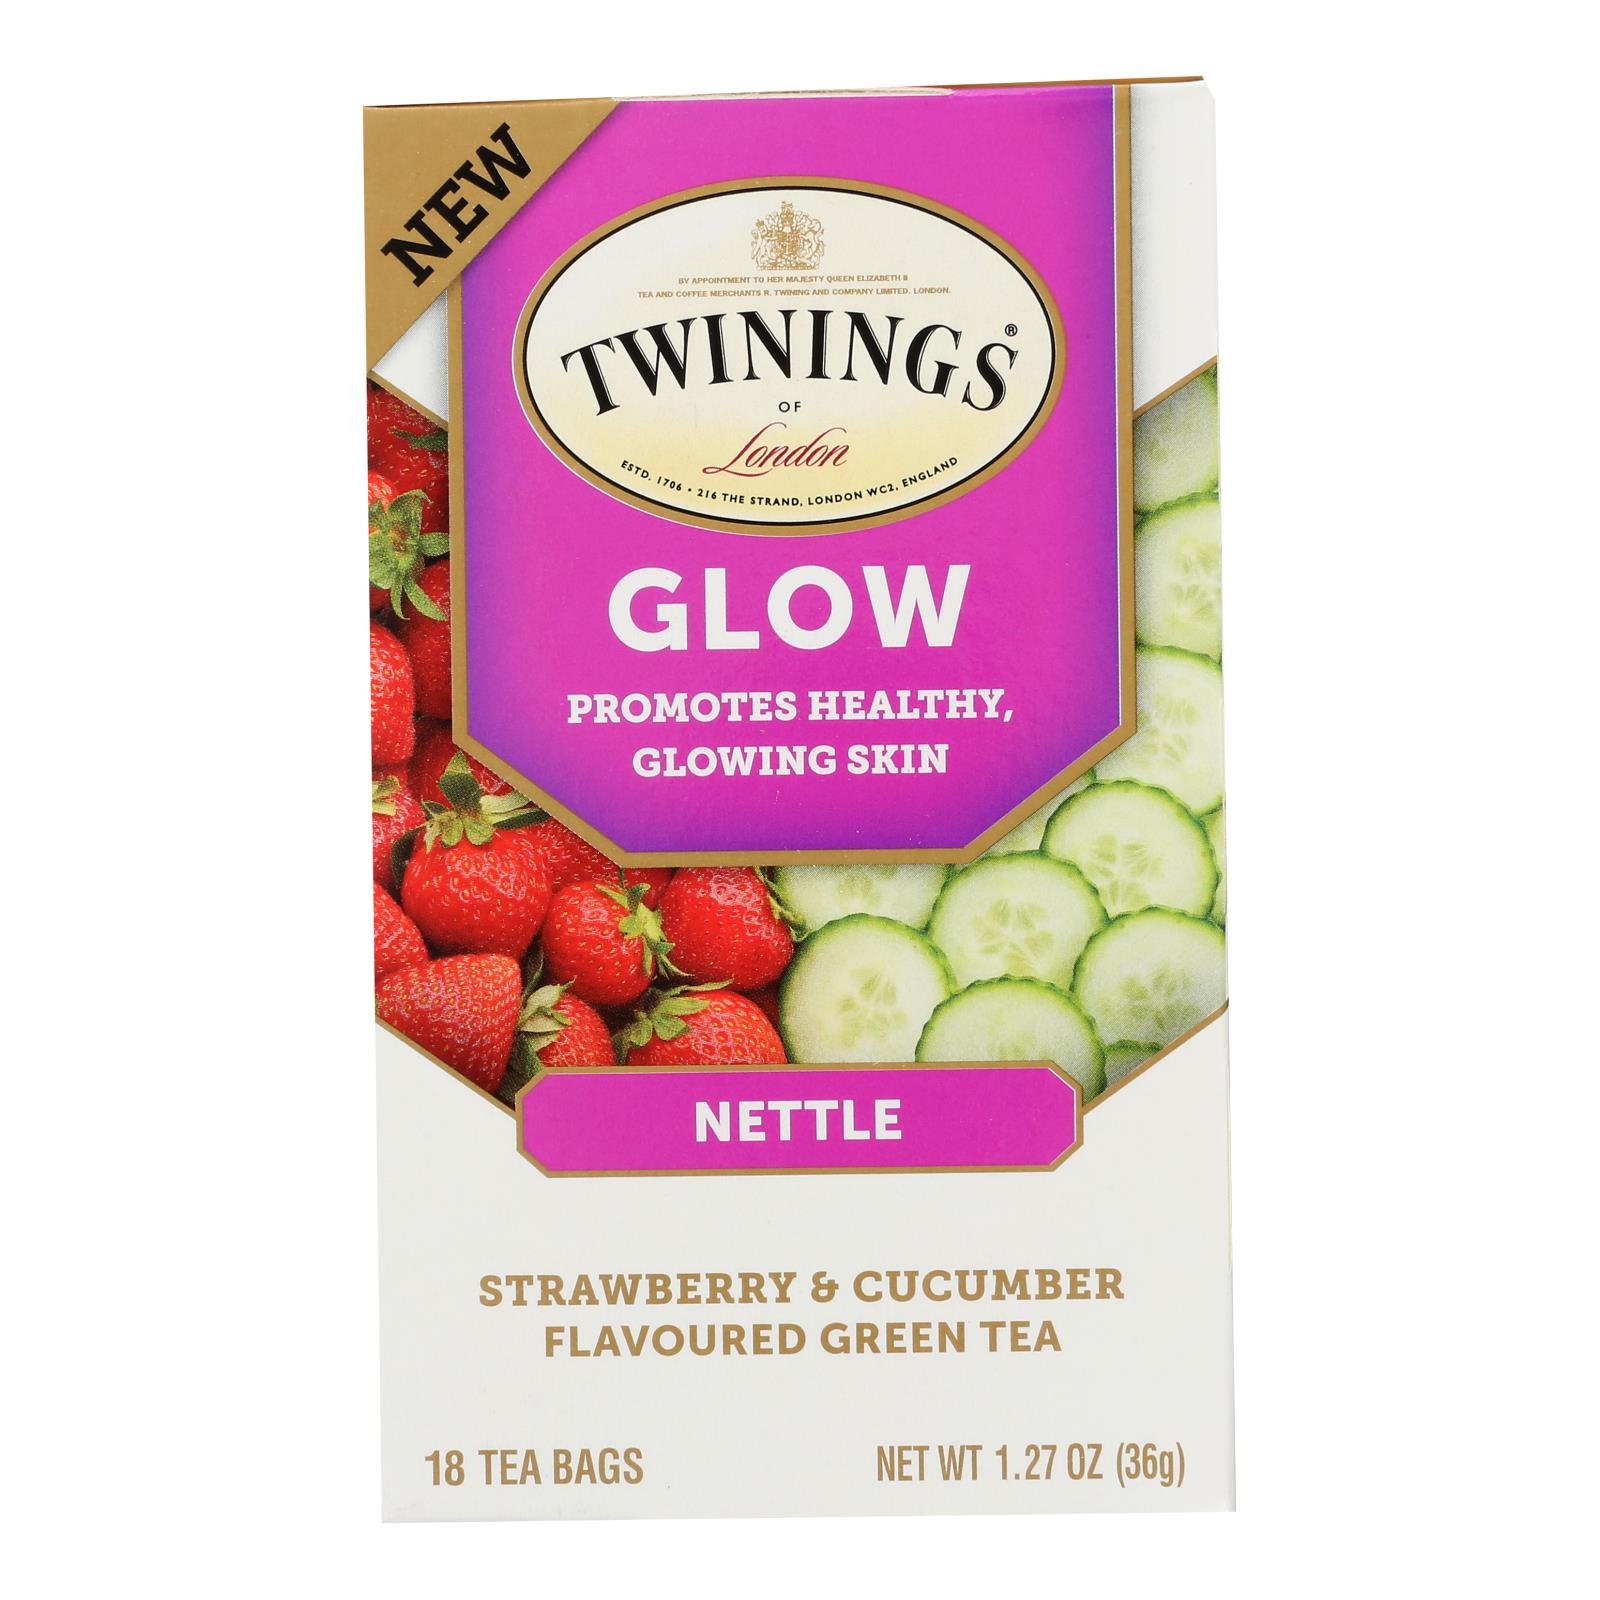 Twinings Tea - Tea Wellness Glow - 6개 묶음상품 - 18 BAG